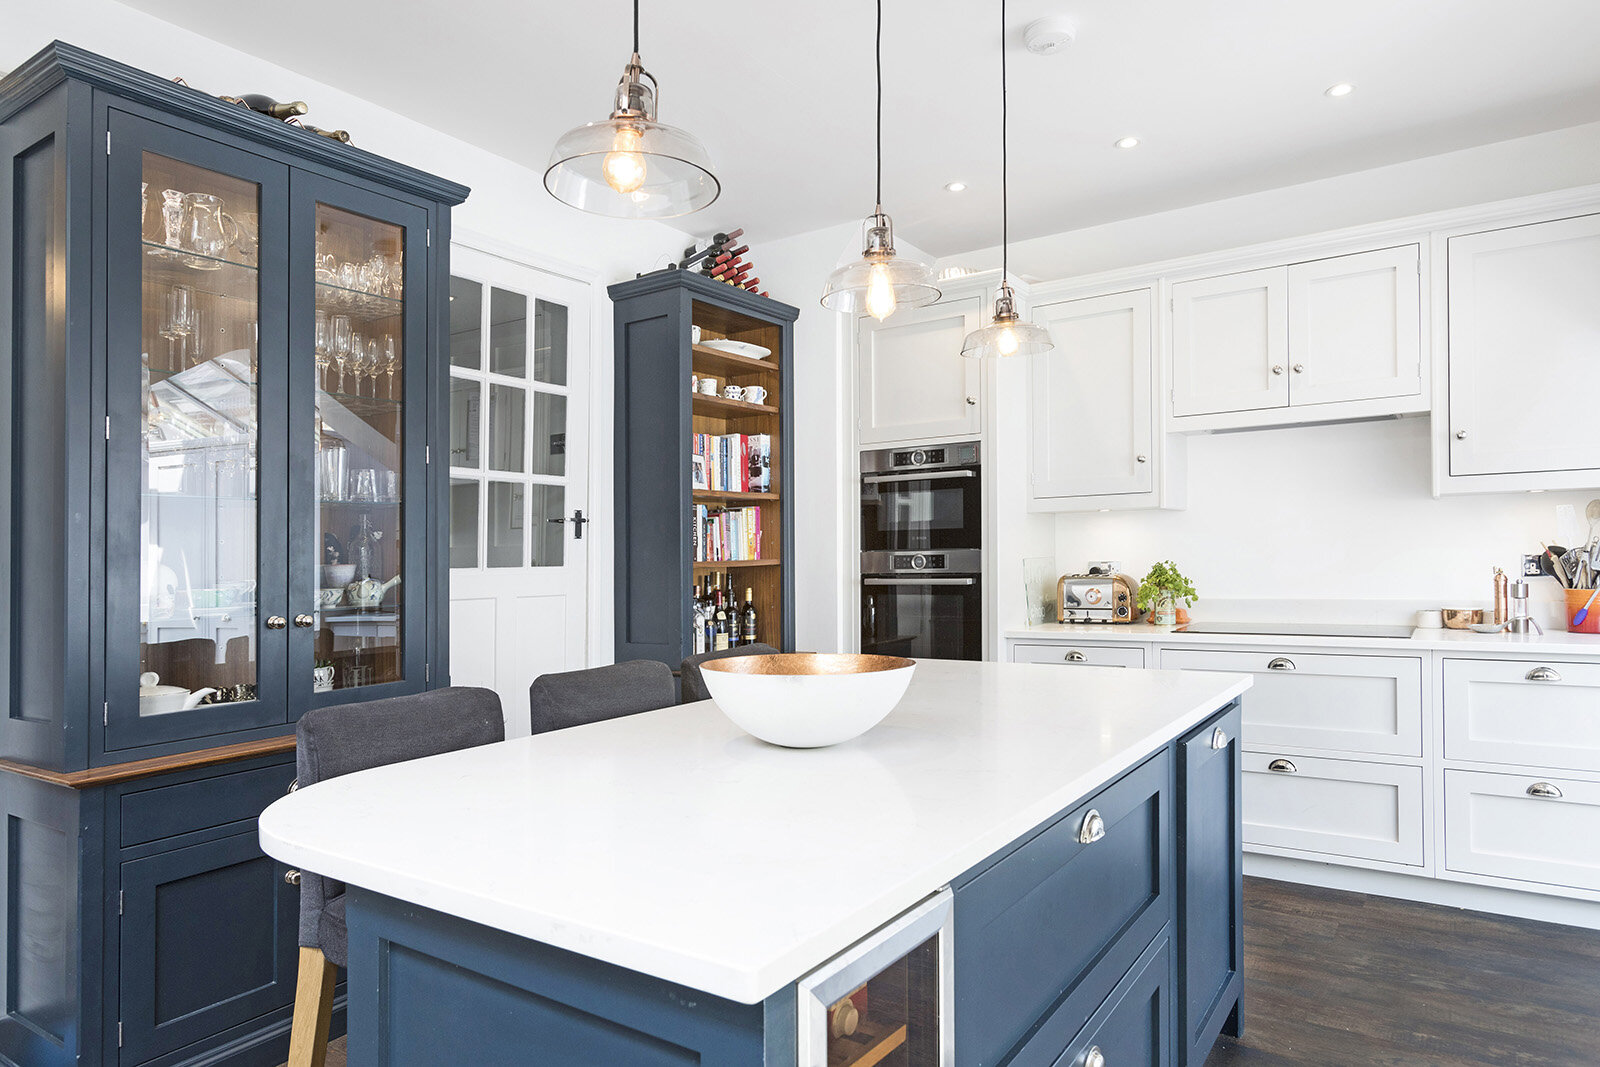 white blue paint wooden kitchen bespoke design interior photography thebestshot.co.uk.jpg